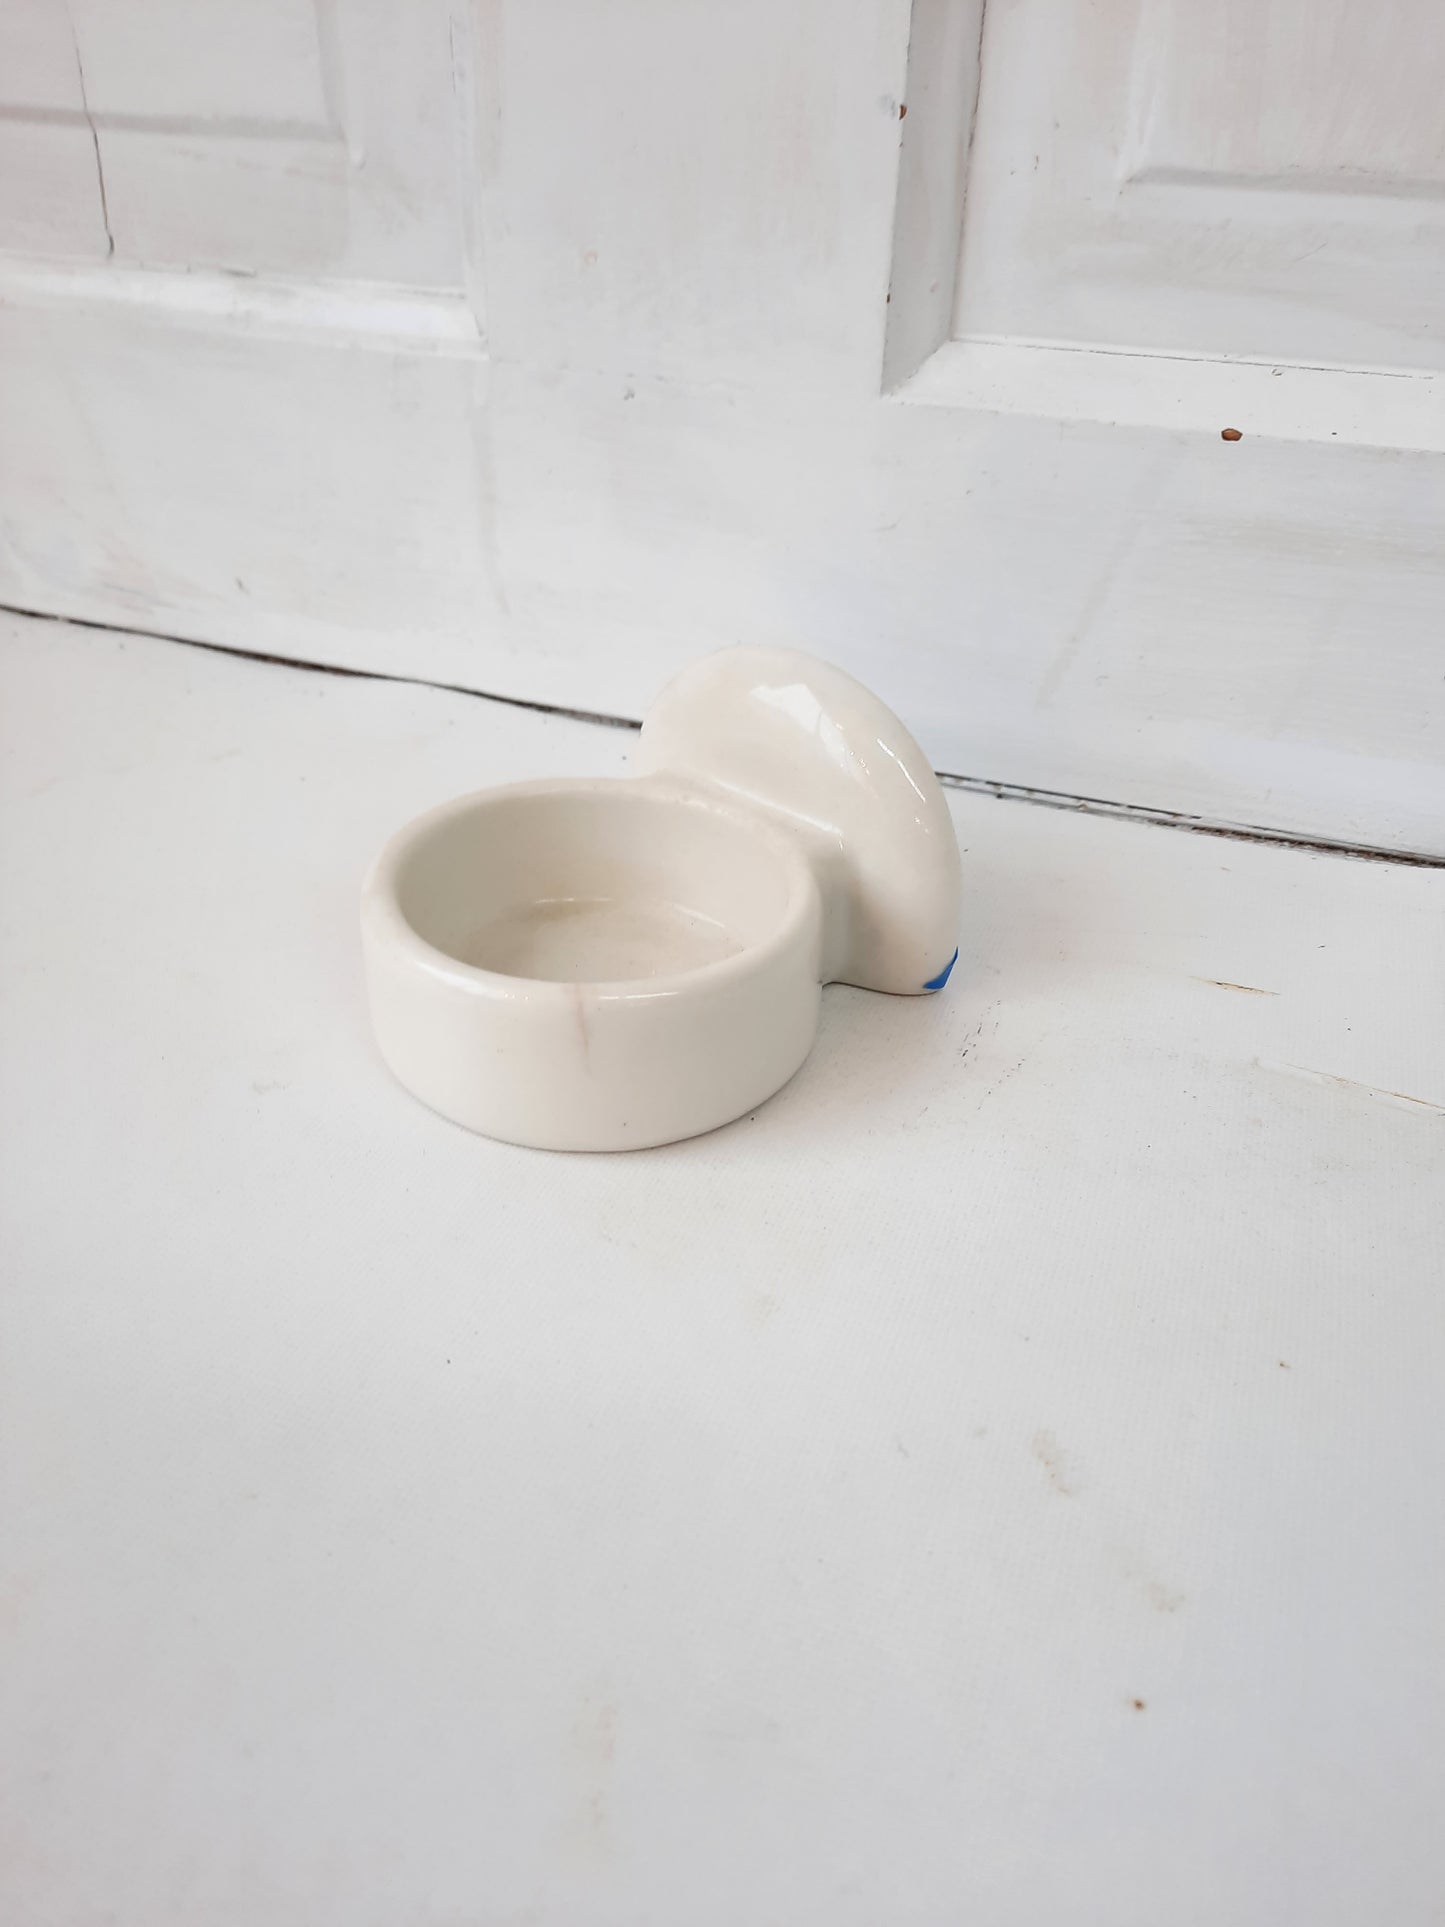 Vintage White Porcelain Bathroom Cup Holder or Soap Dish, Wall Mount Ceramic Cup Holder 121001